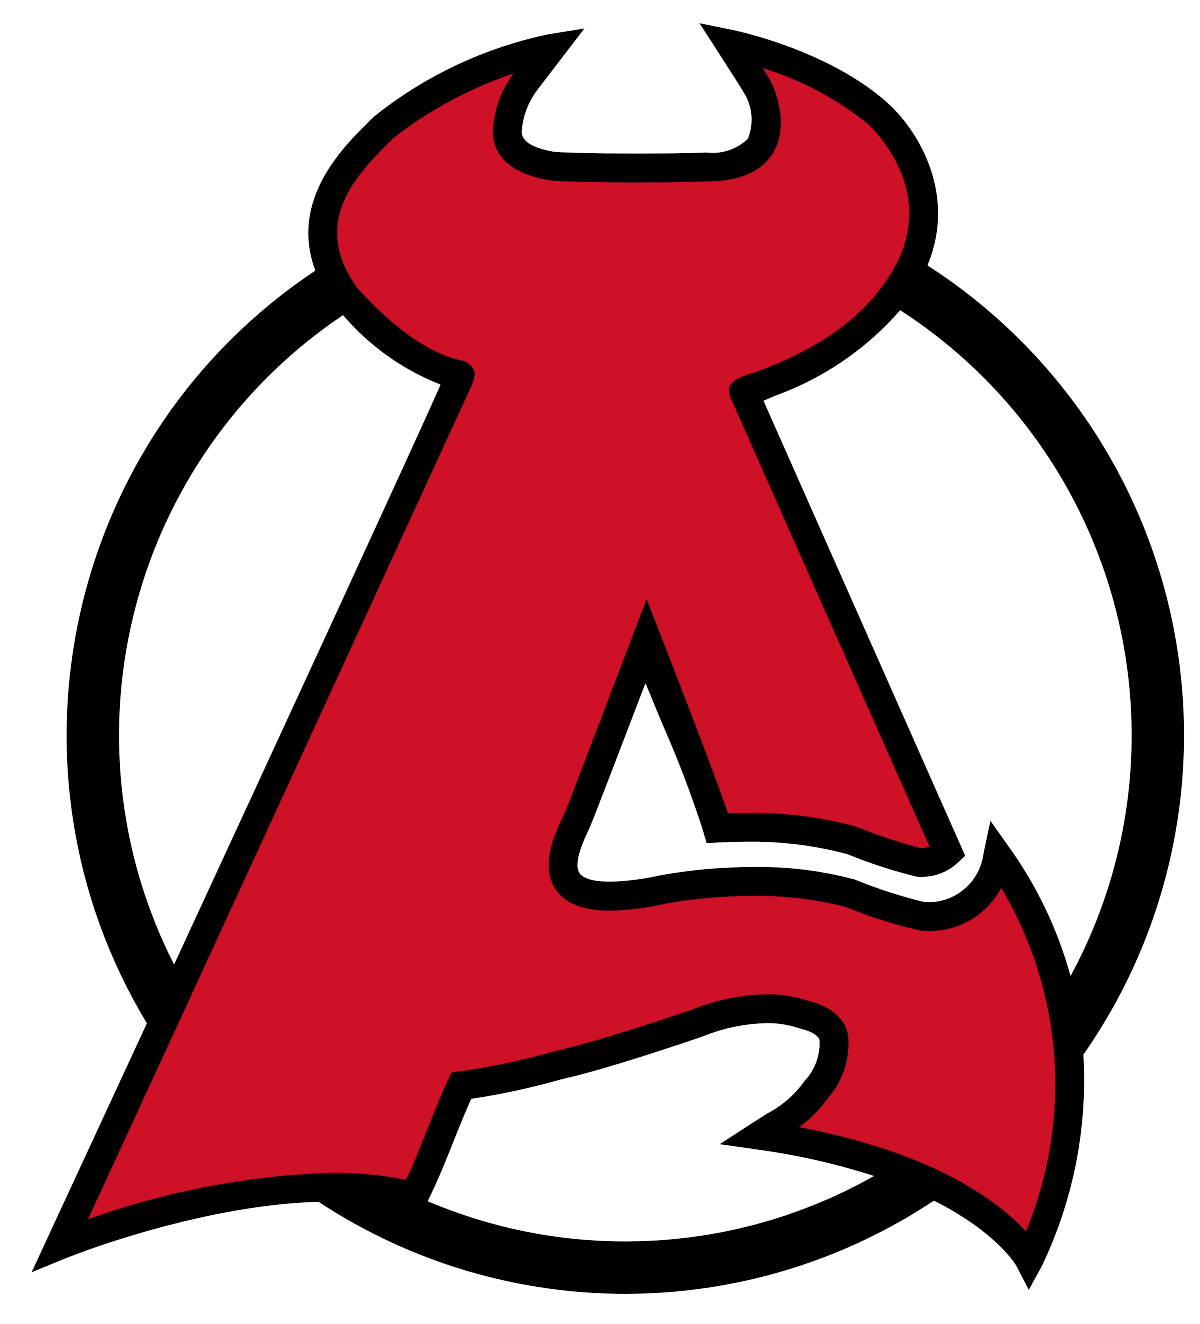 Albany Devils - Wikipedia